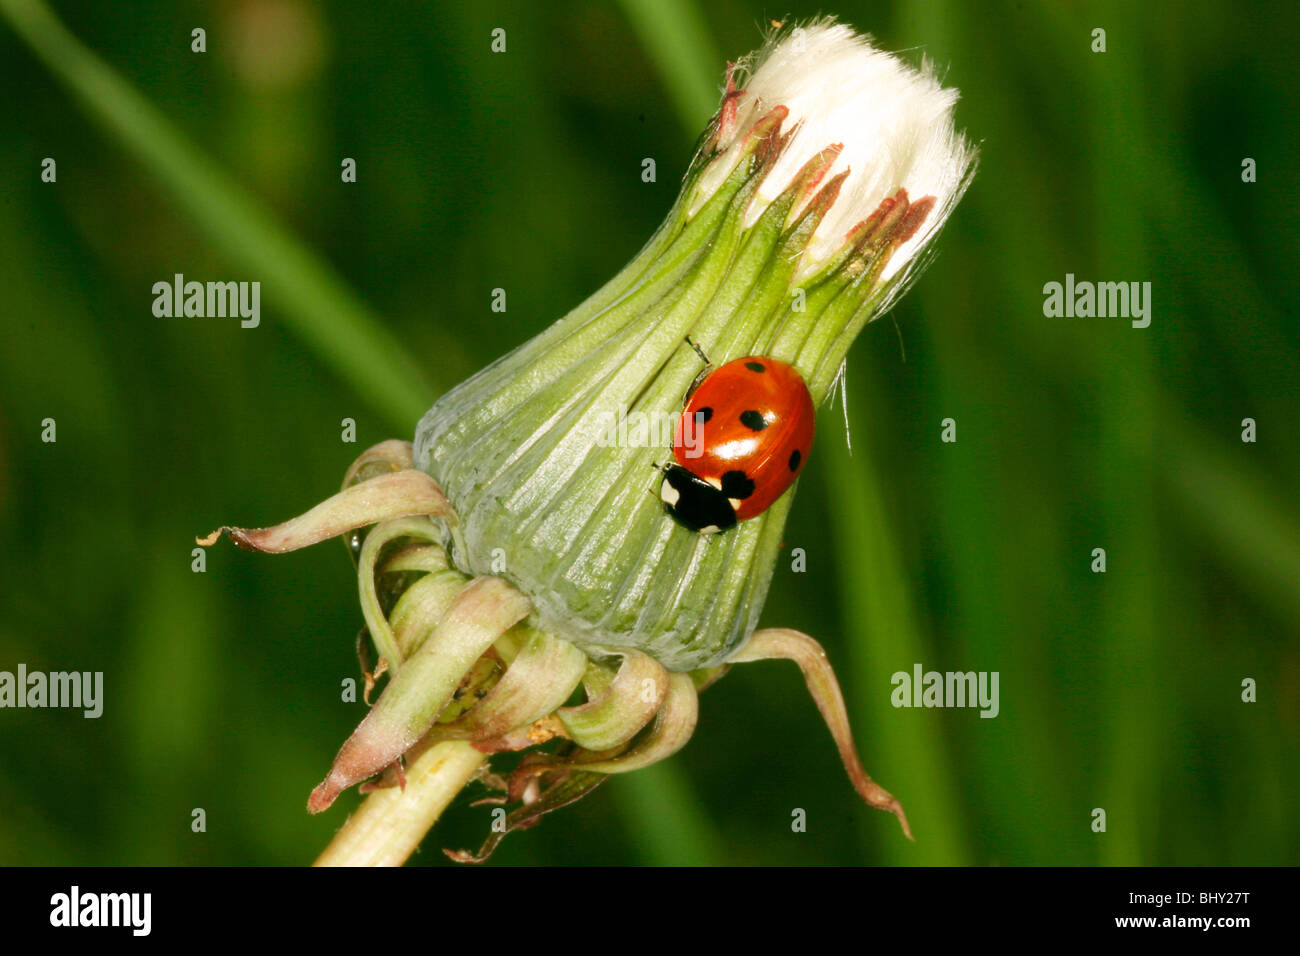 Ladybird on a dandelion Stock Photo